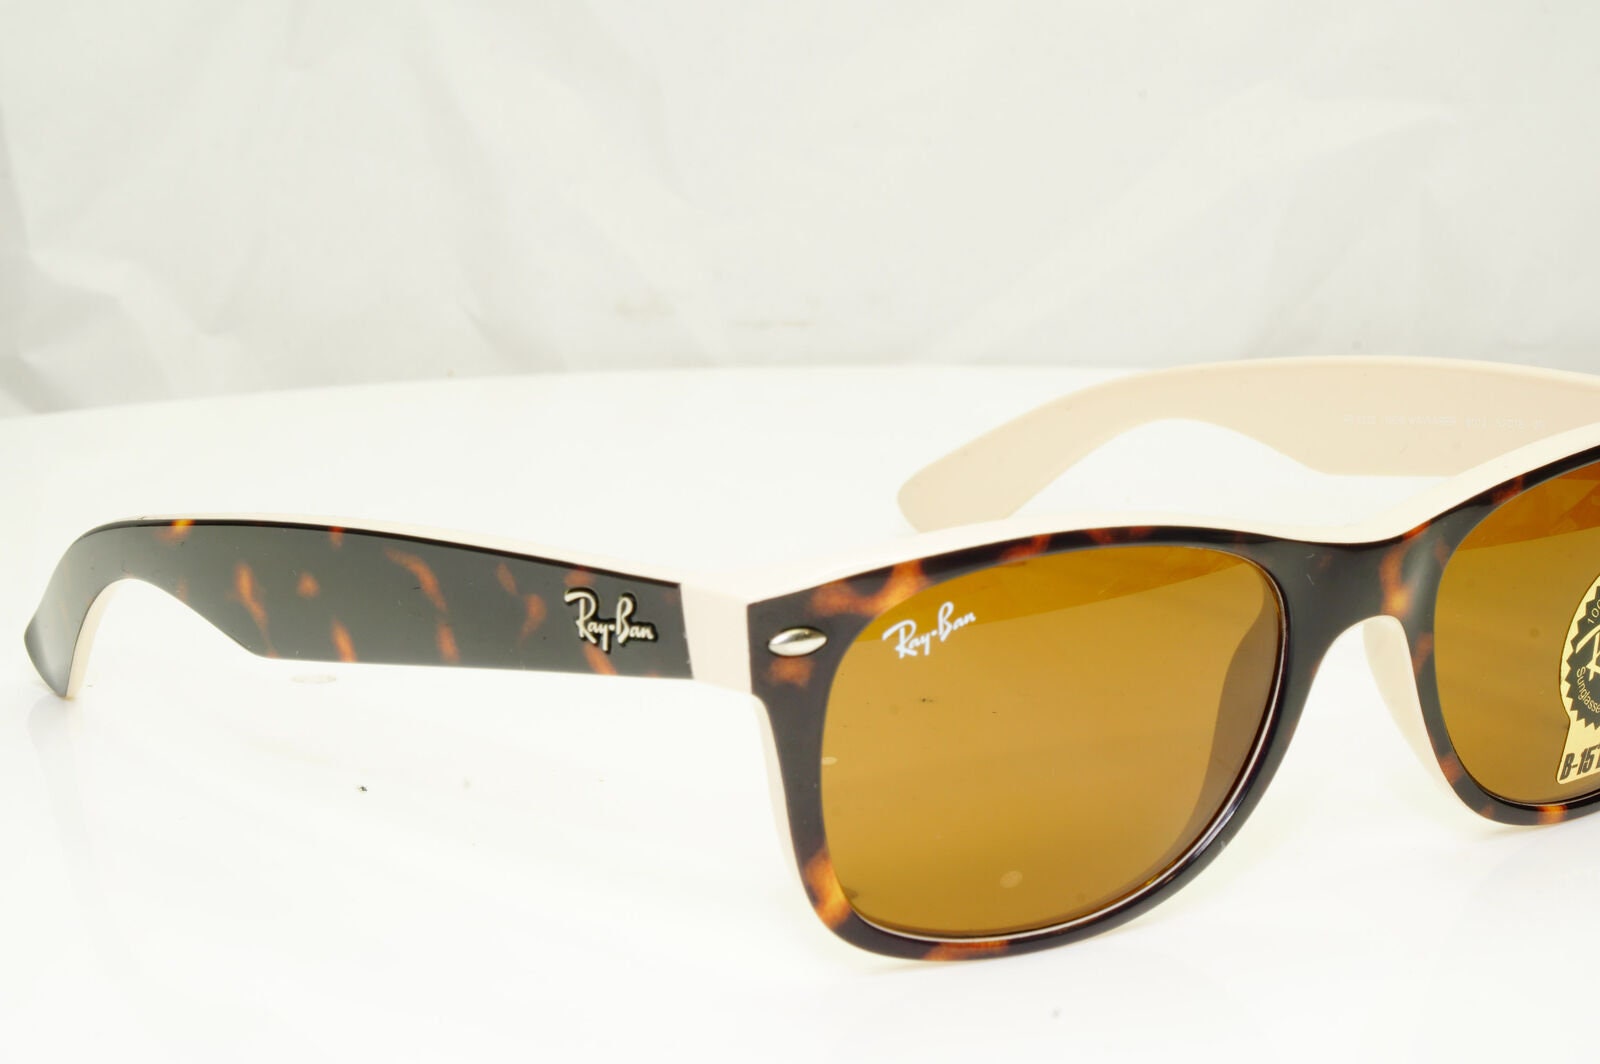 Authentic Ray-Ban Mens Vintage Sunglasses Rb 2132 New Wayfarer | Etsy